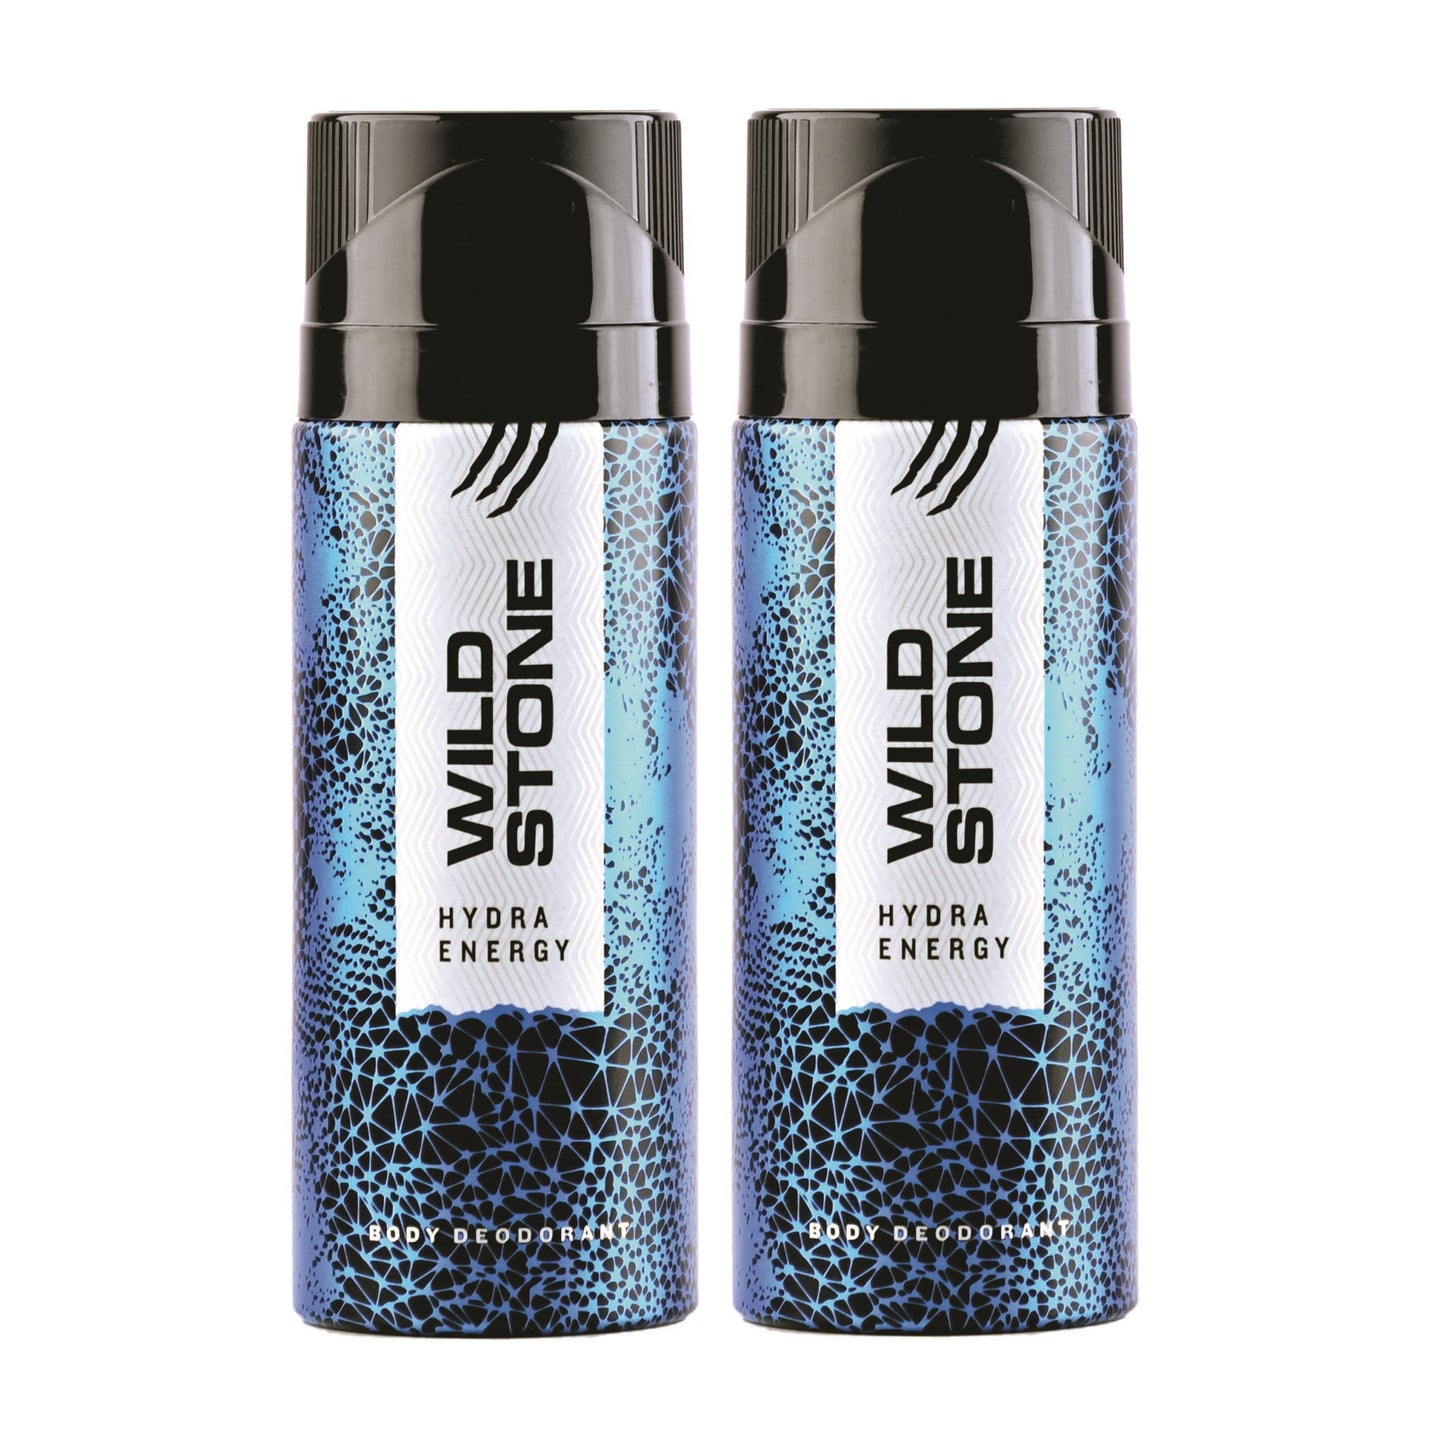 Wild Stone Hydra Energy Deodorant Pack of 2 (150ml each)